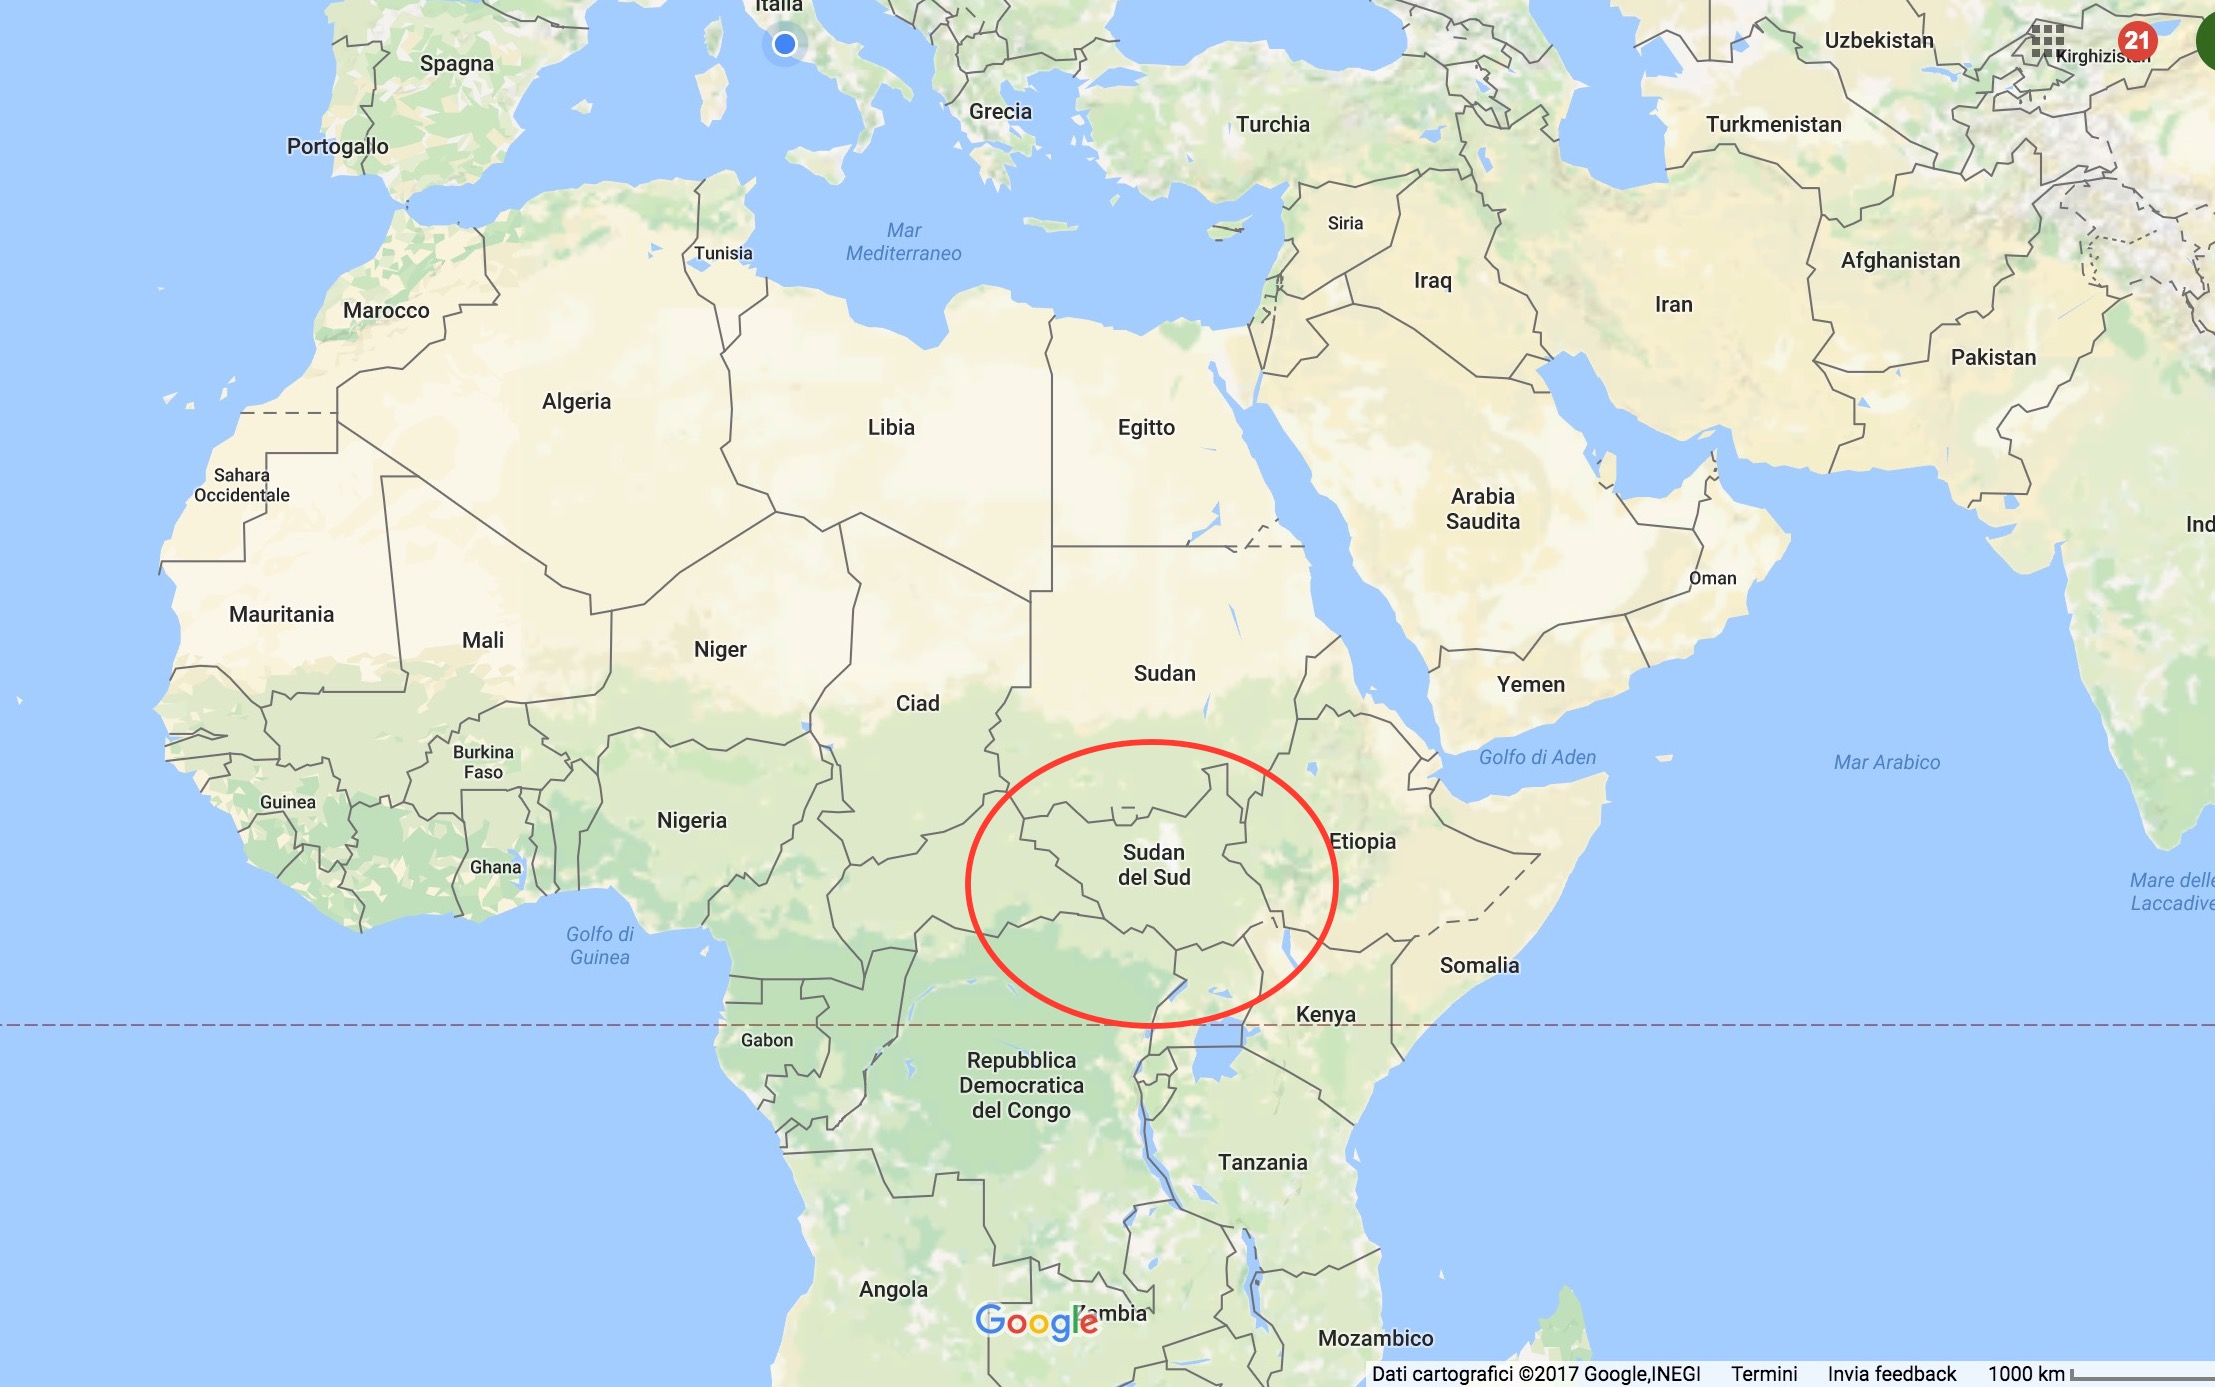 Sudan del Sur (Google Maps)